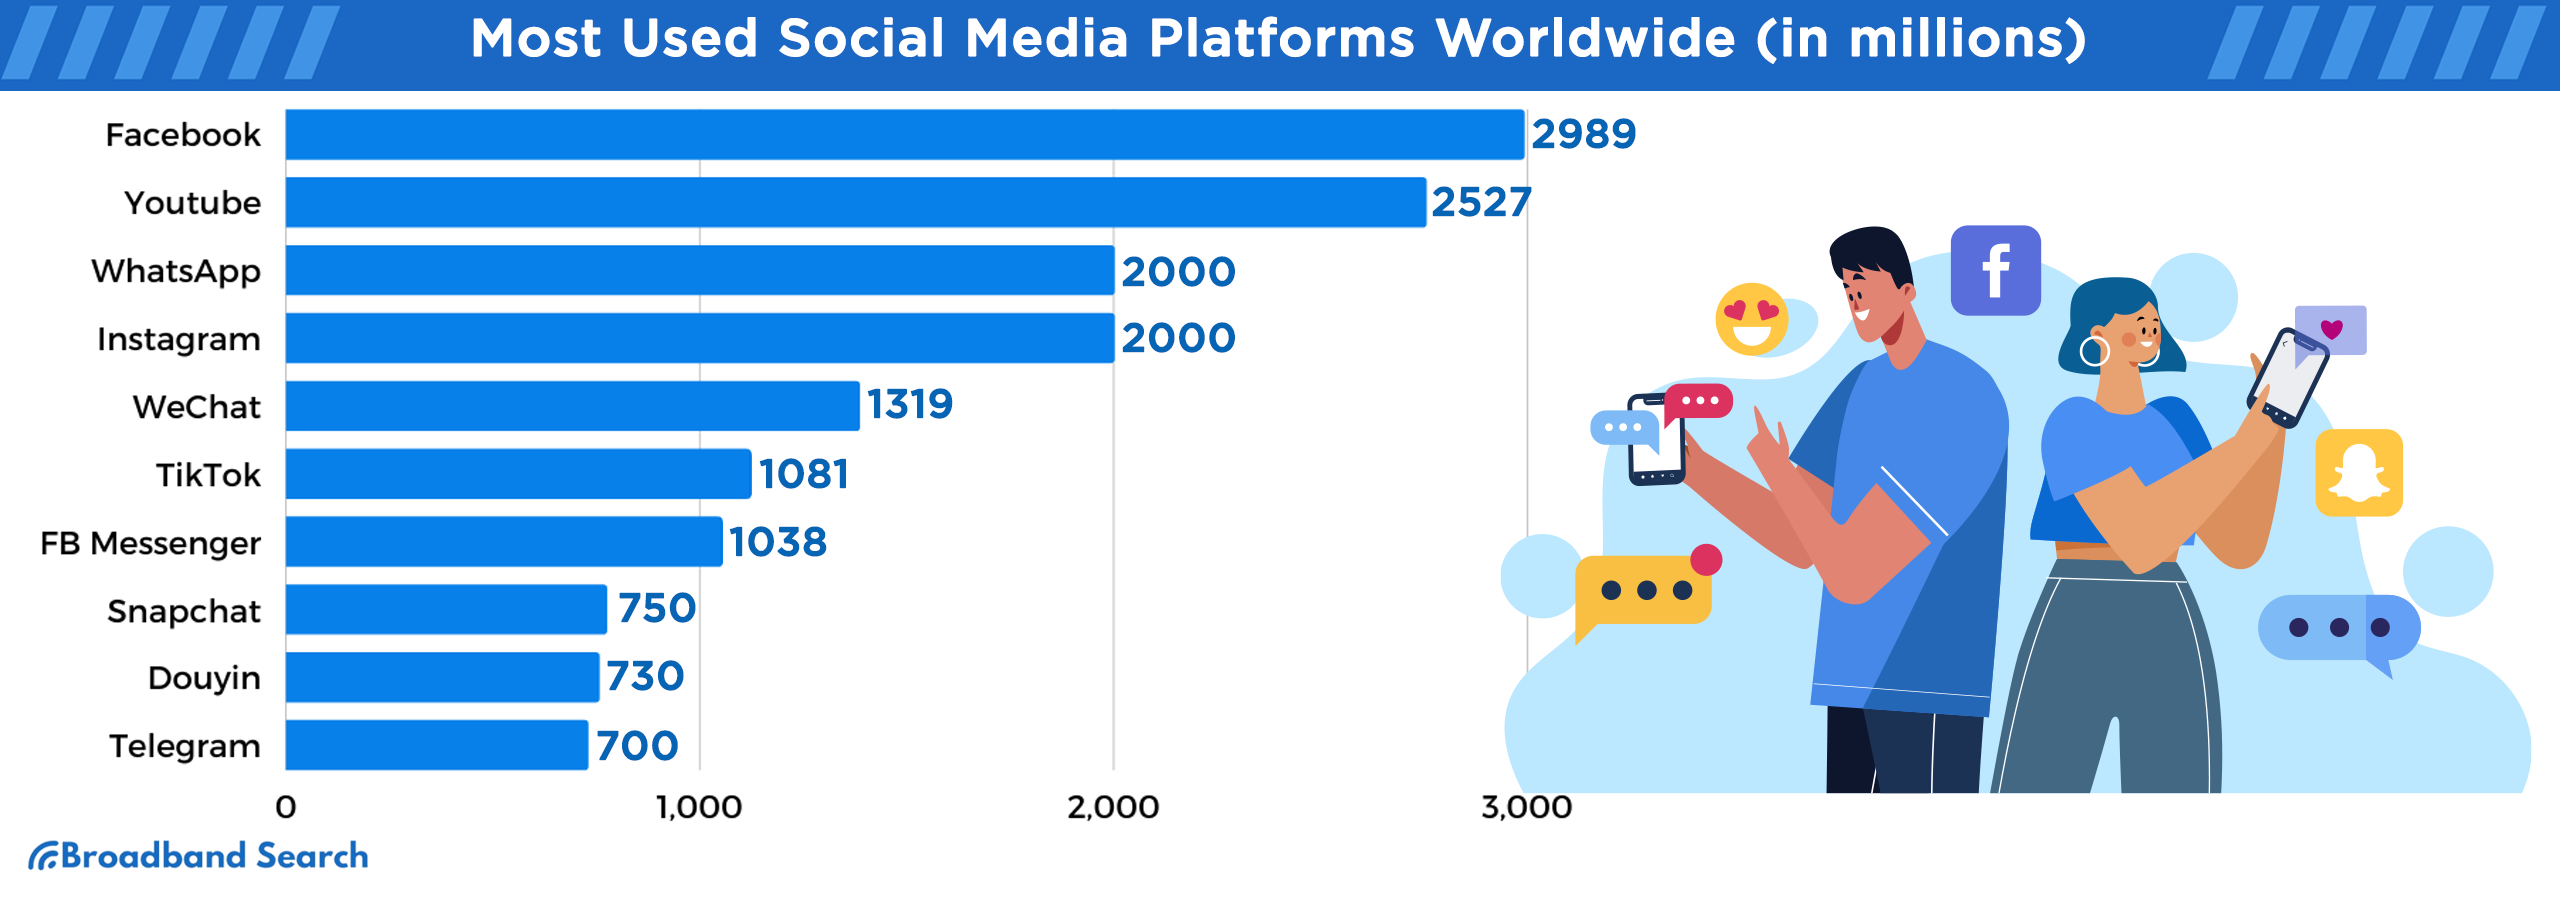 Most used social media platforms online. In millions